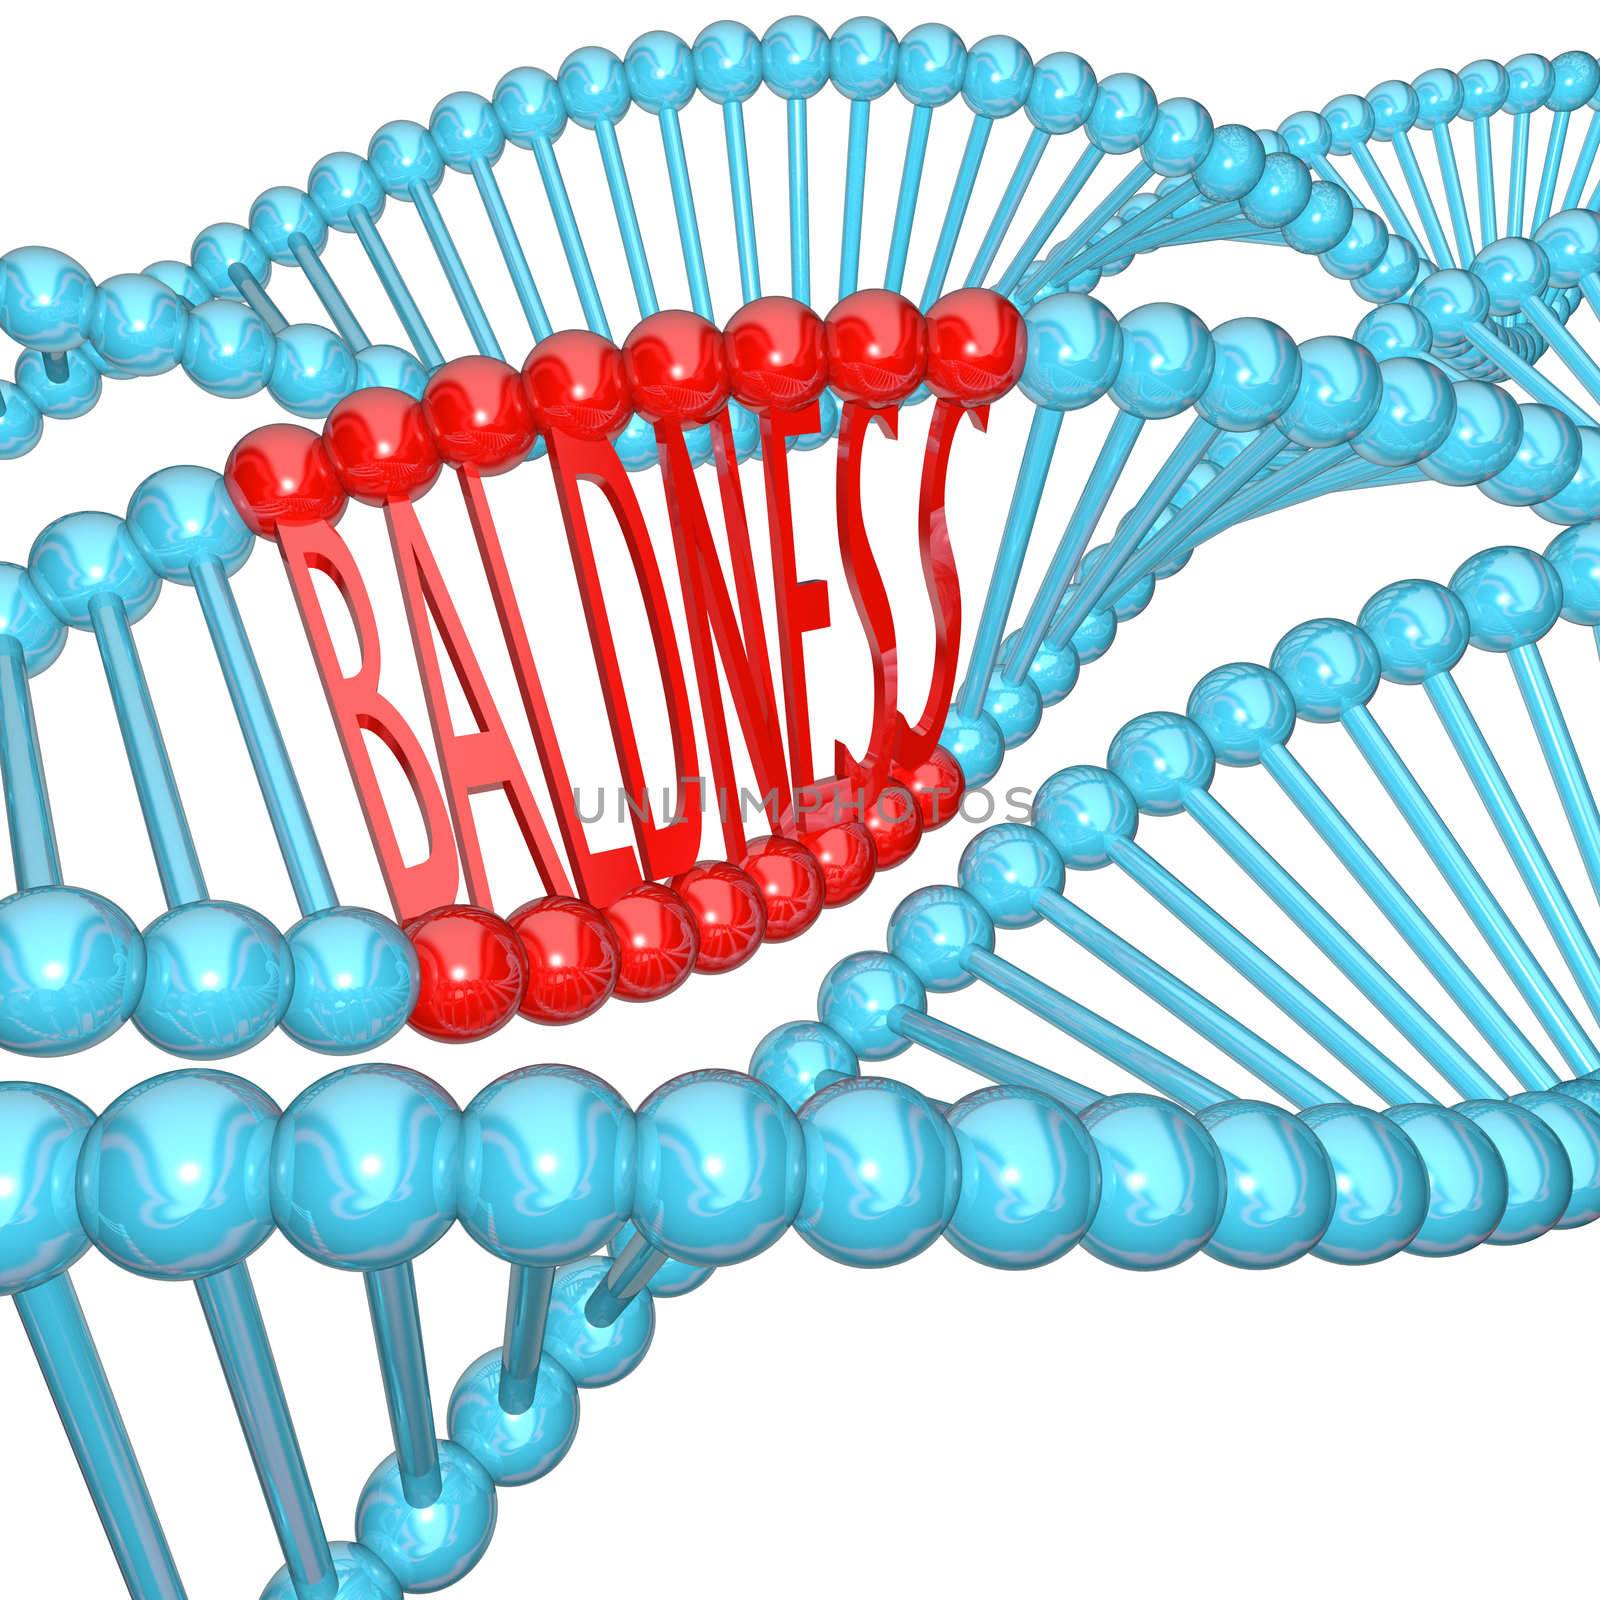 Baldness - Hereditary Genetics in DNA Strand by iQoncept